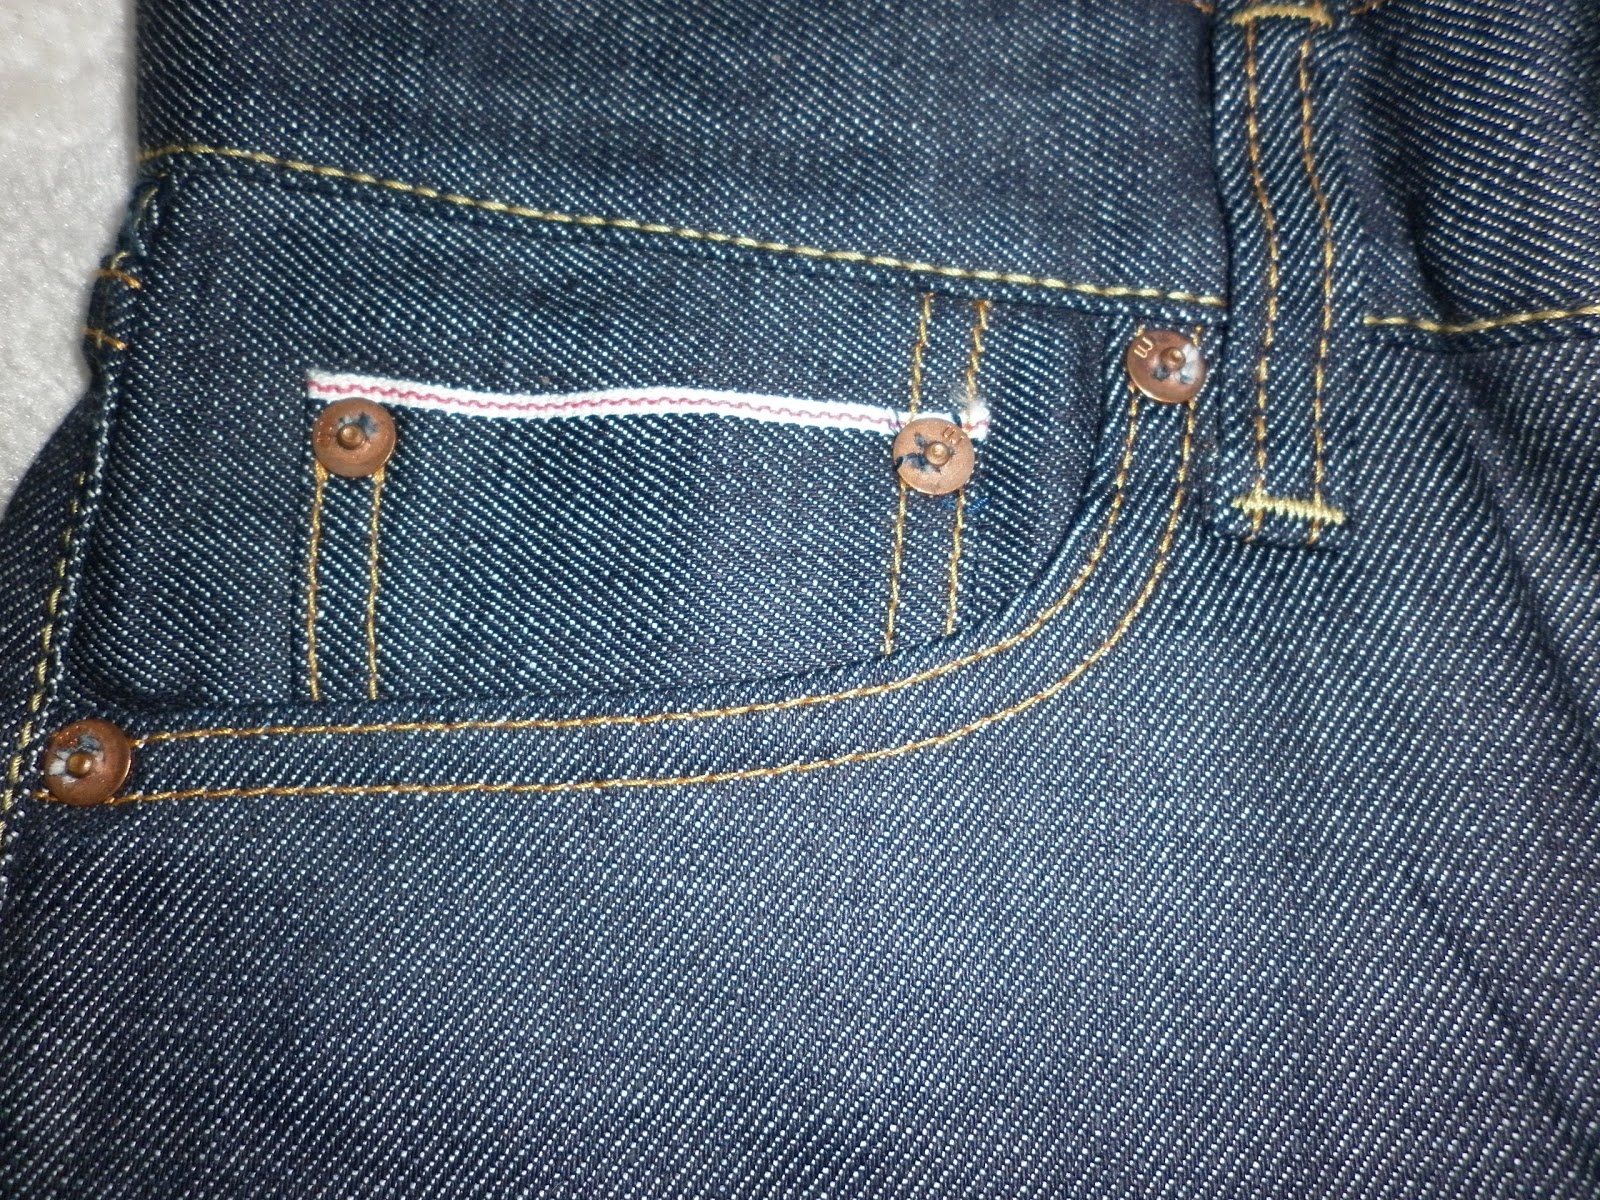 bundle ofNever: Uniqlo UJ Selvedge Jeans - Sold!